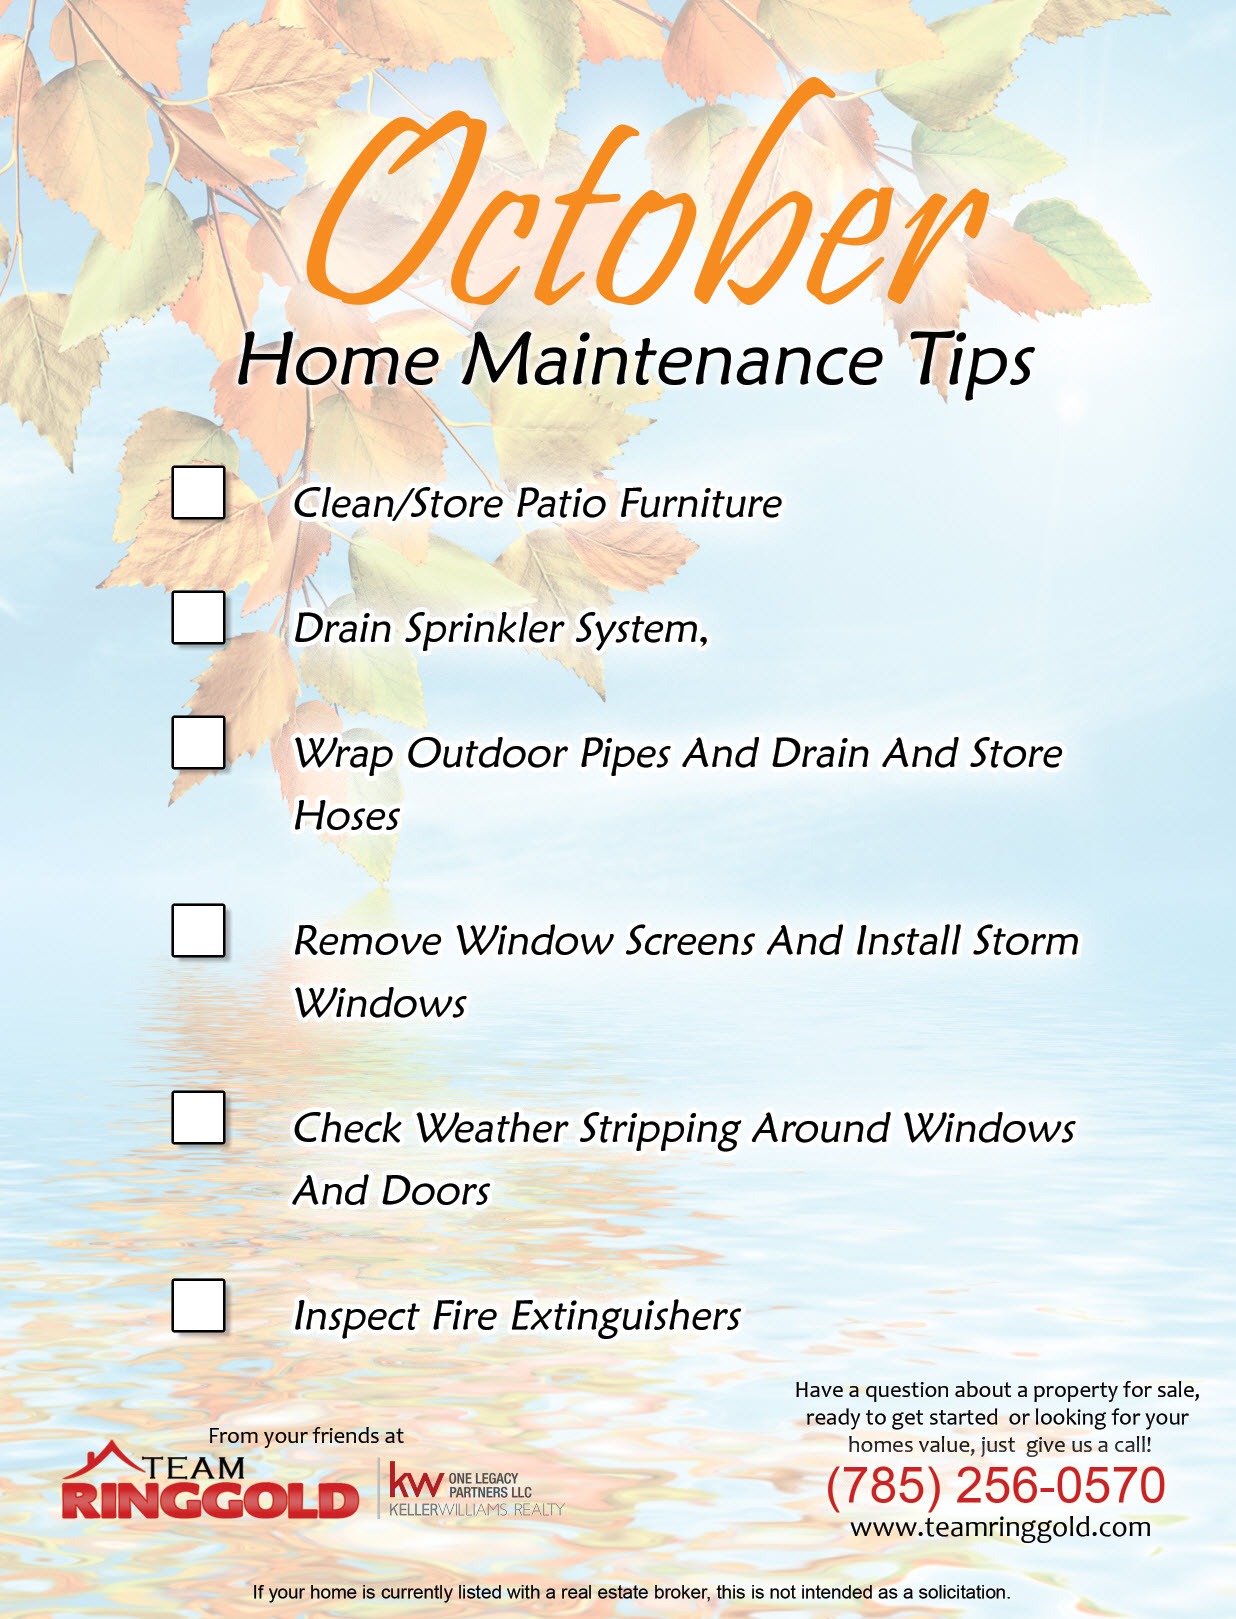 Home Maintenance Tips | October